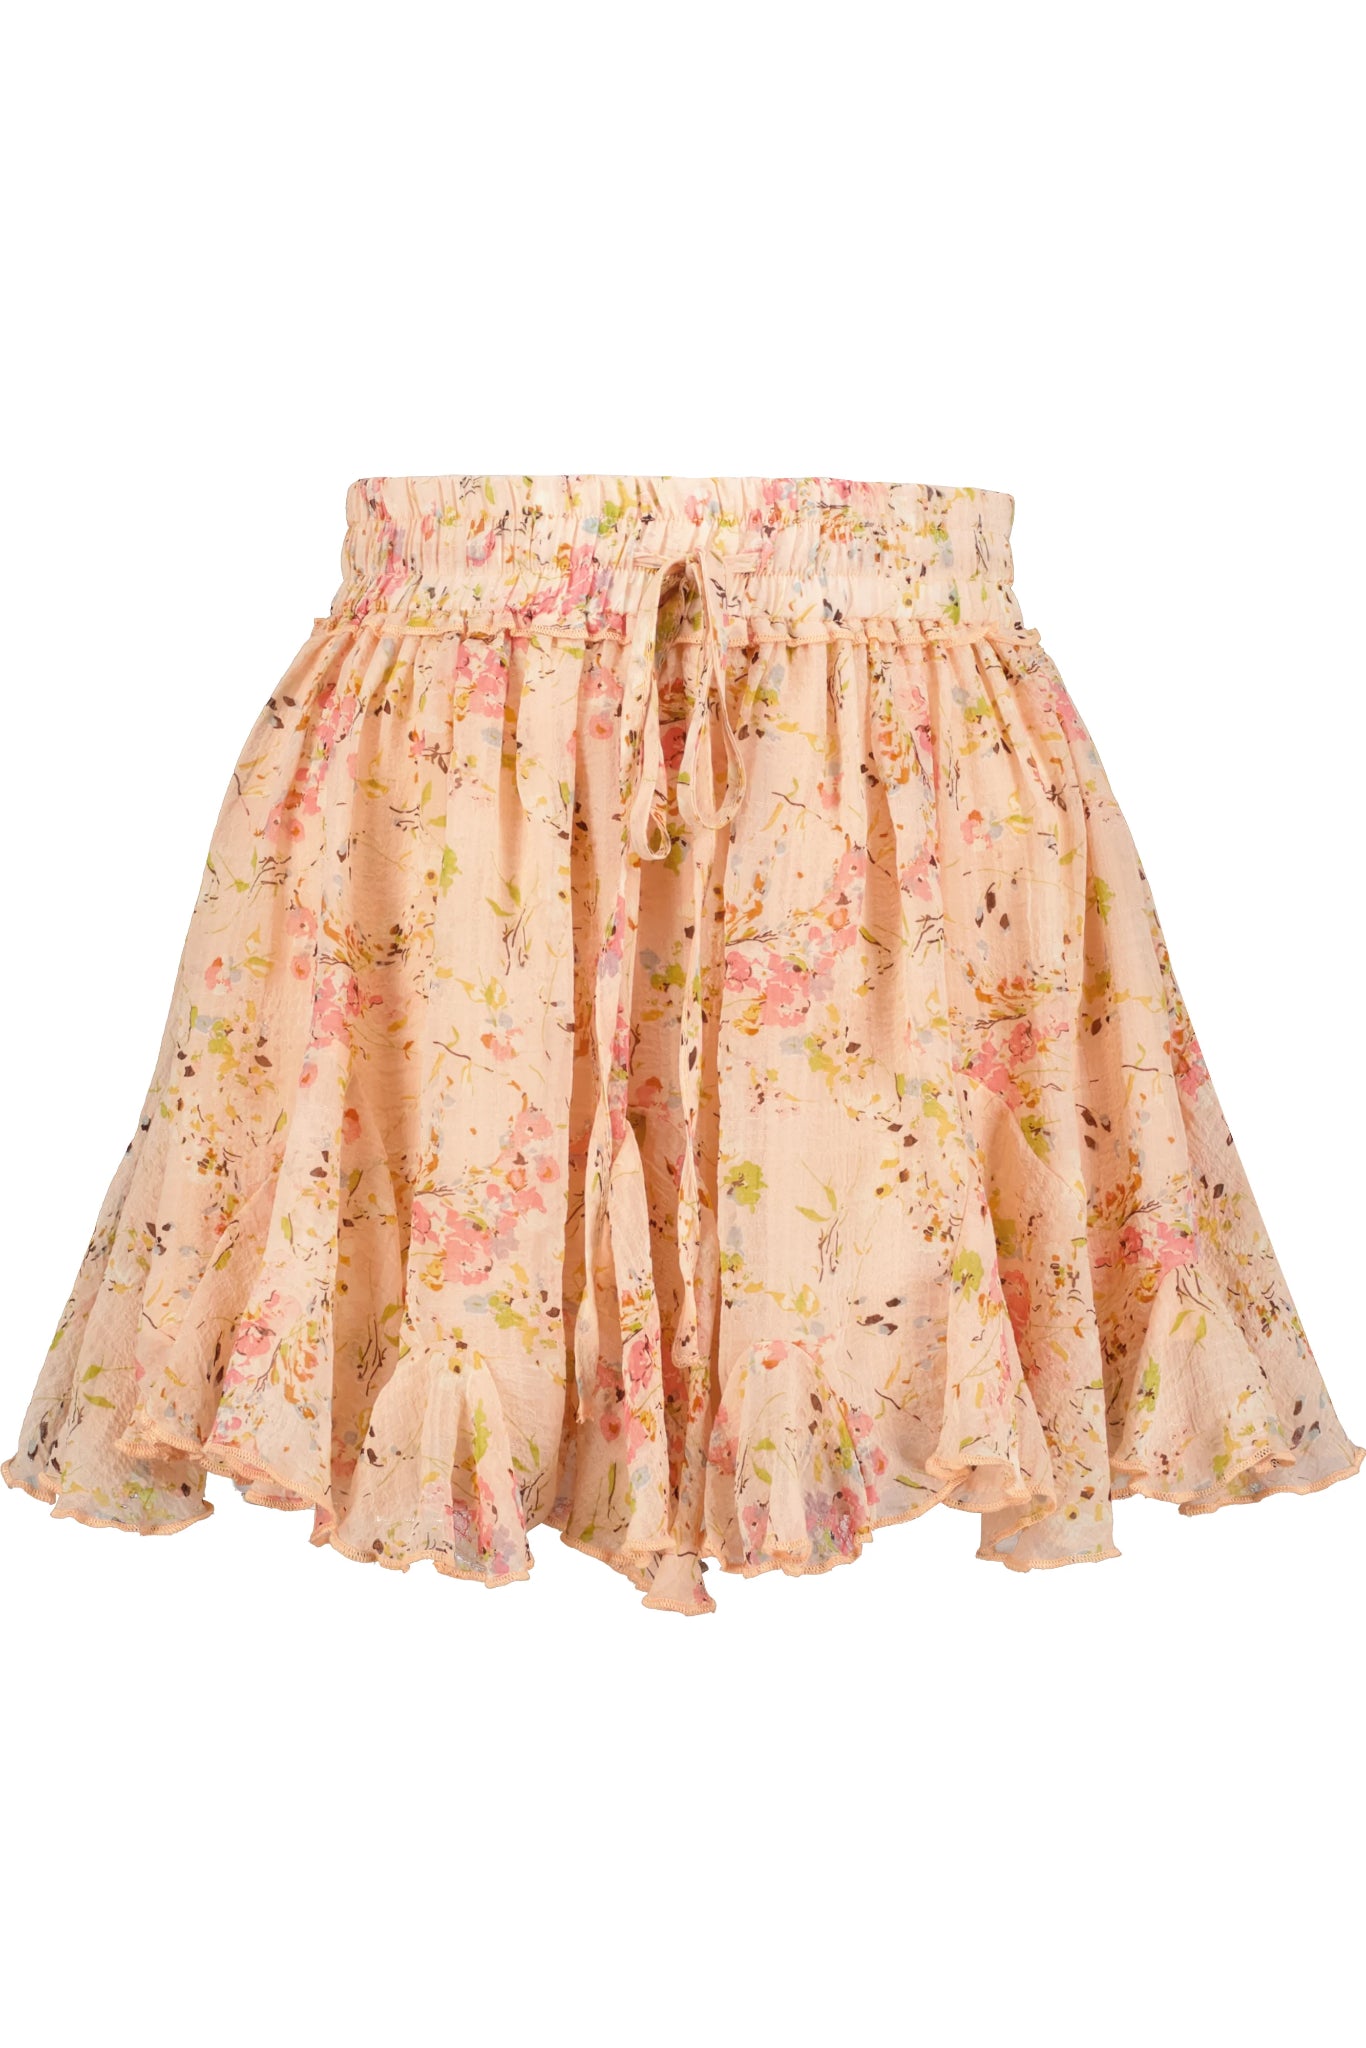 Summer Fling Floral Skirt